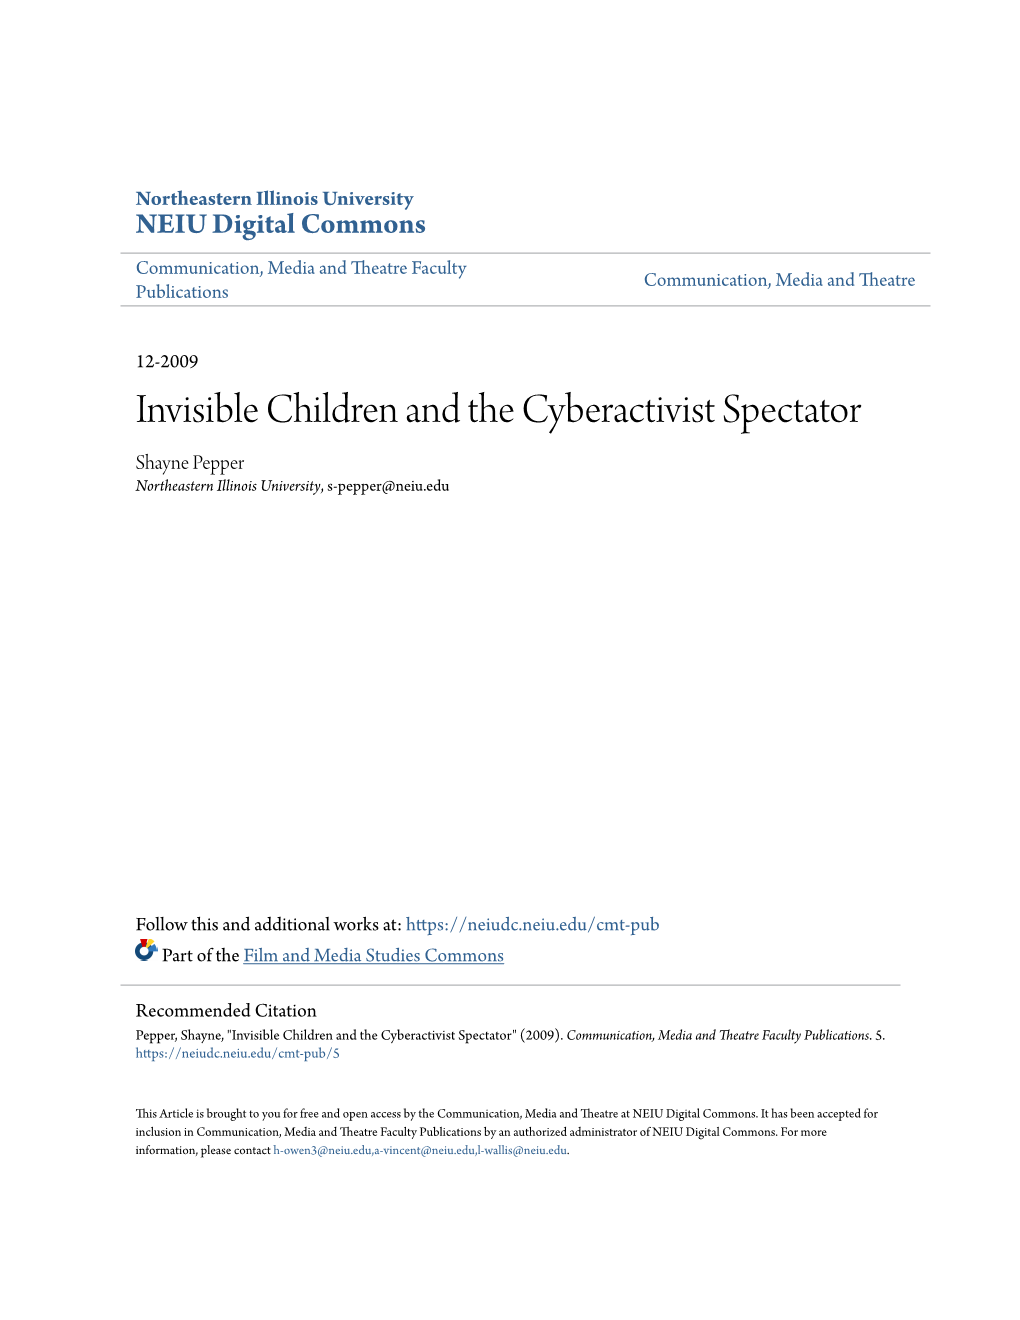 Invisible Children and the Cyberactivist Spectator Shayne Pepper Northeastern Illinois University, S-Pepper@Neiu.Edu